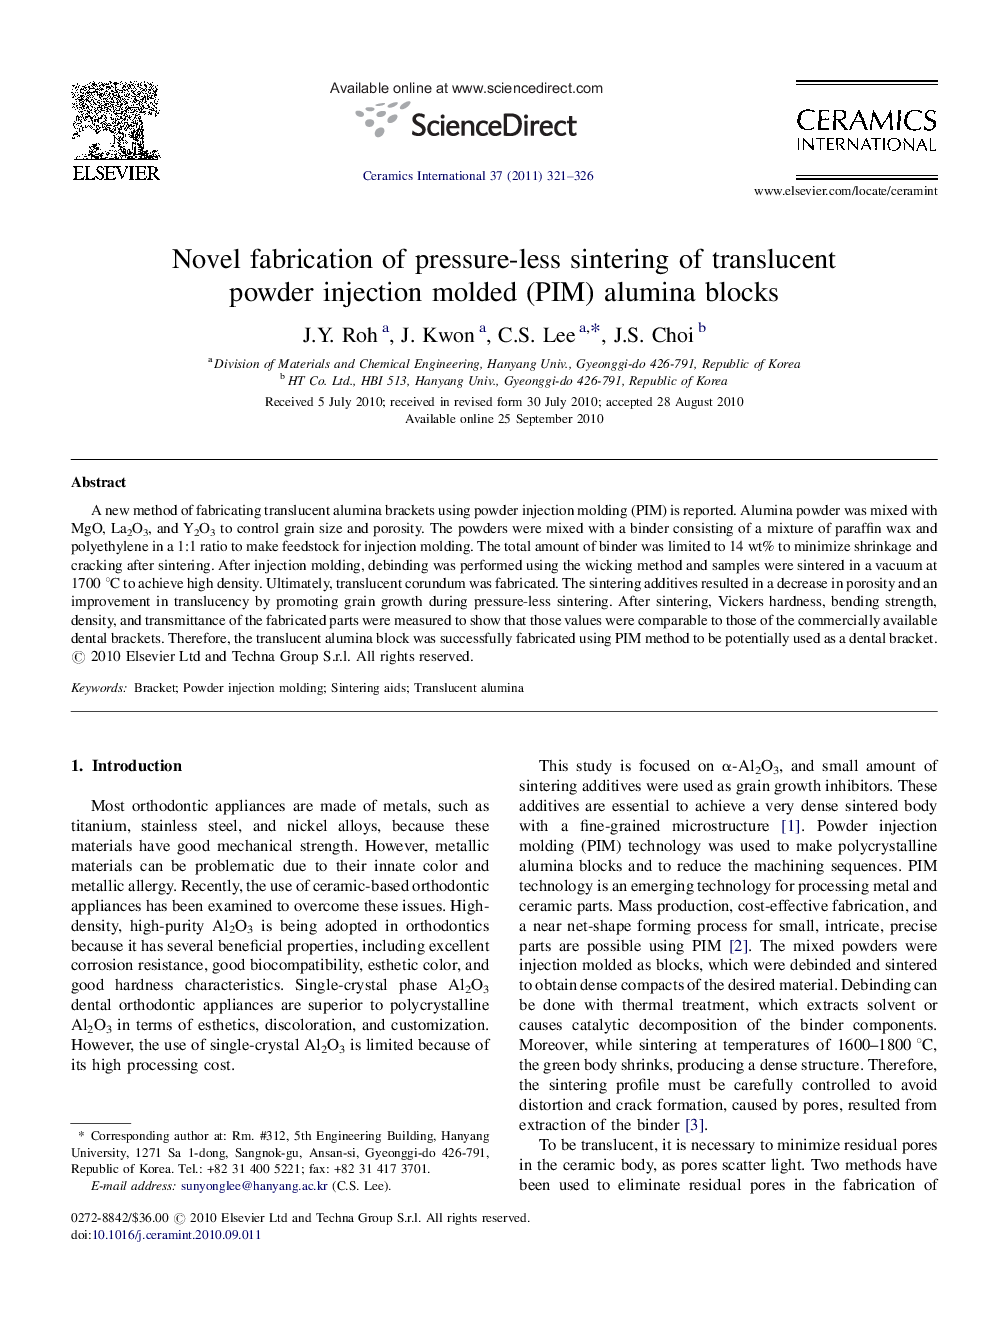 Novel fabrication of pressure-less sintering of translucent powder injection molded (PIM) alumina blocks